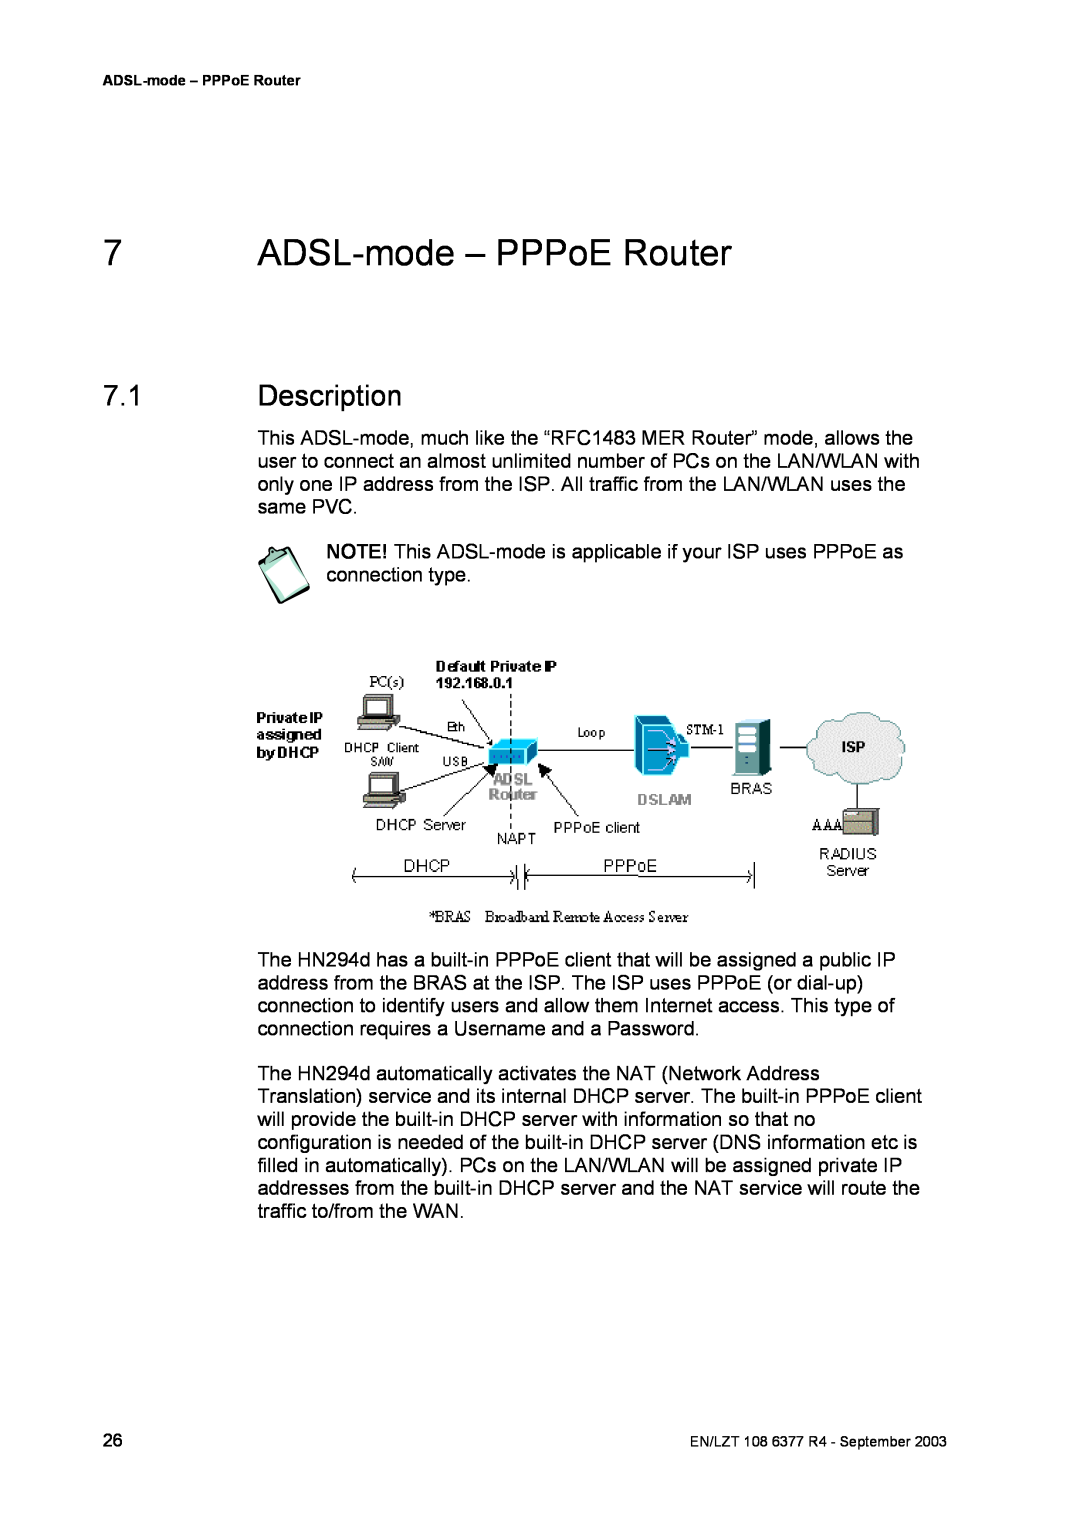 Garmin HN294DP/DI manual ADSL-mode - PPPoE Router, Description 